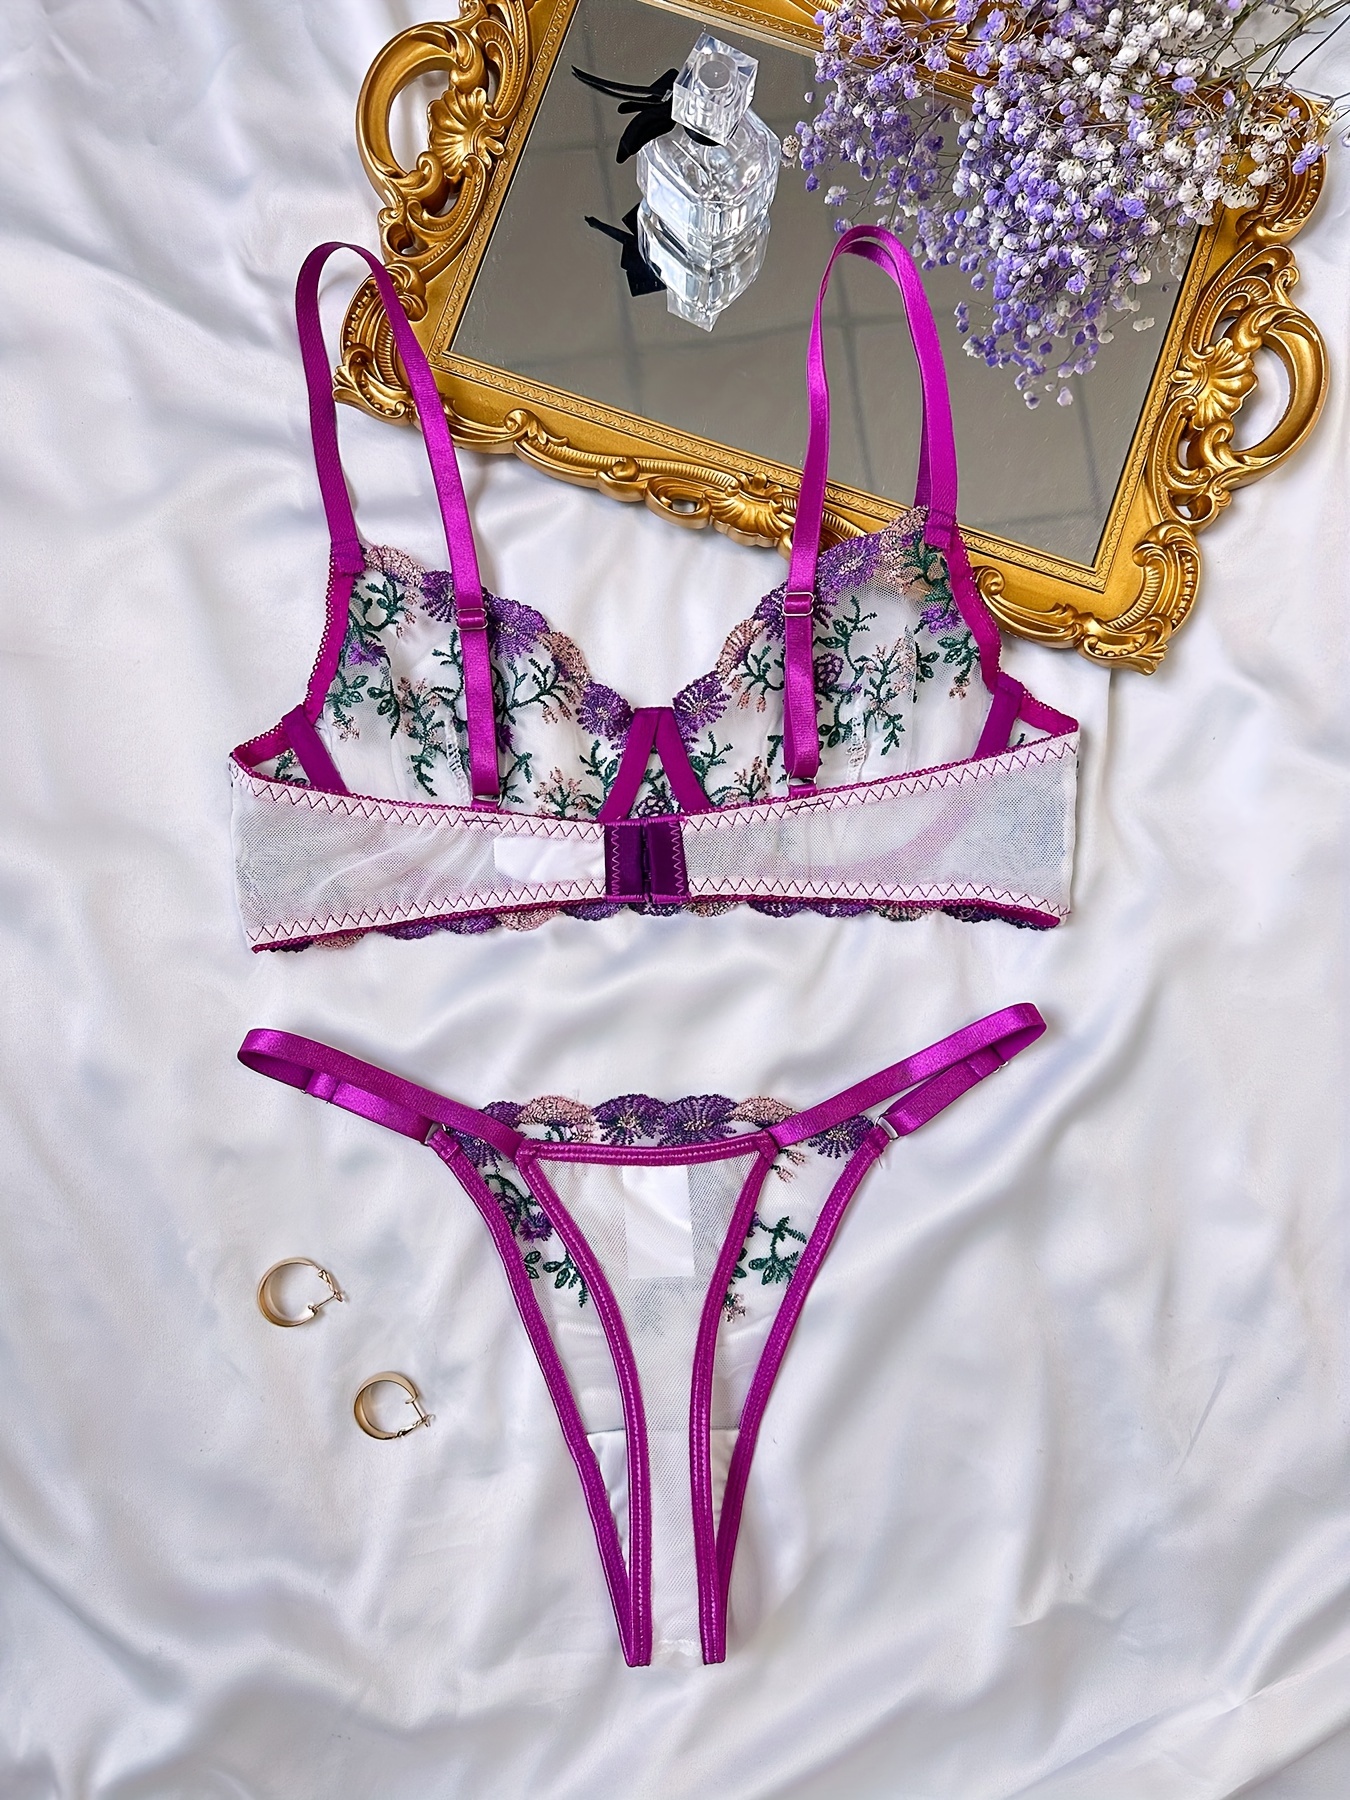 Lingerie For Women Women's Purple Lingerie Lace Embroidery Flower